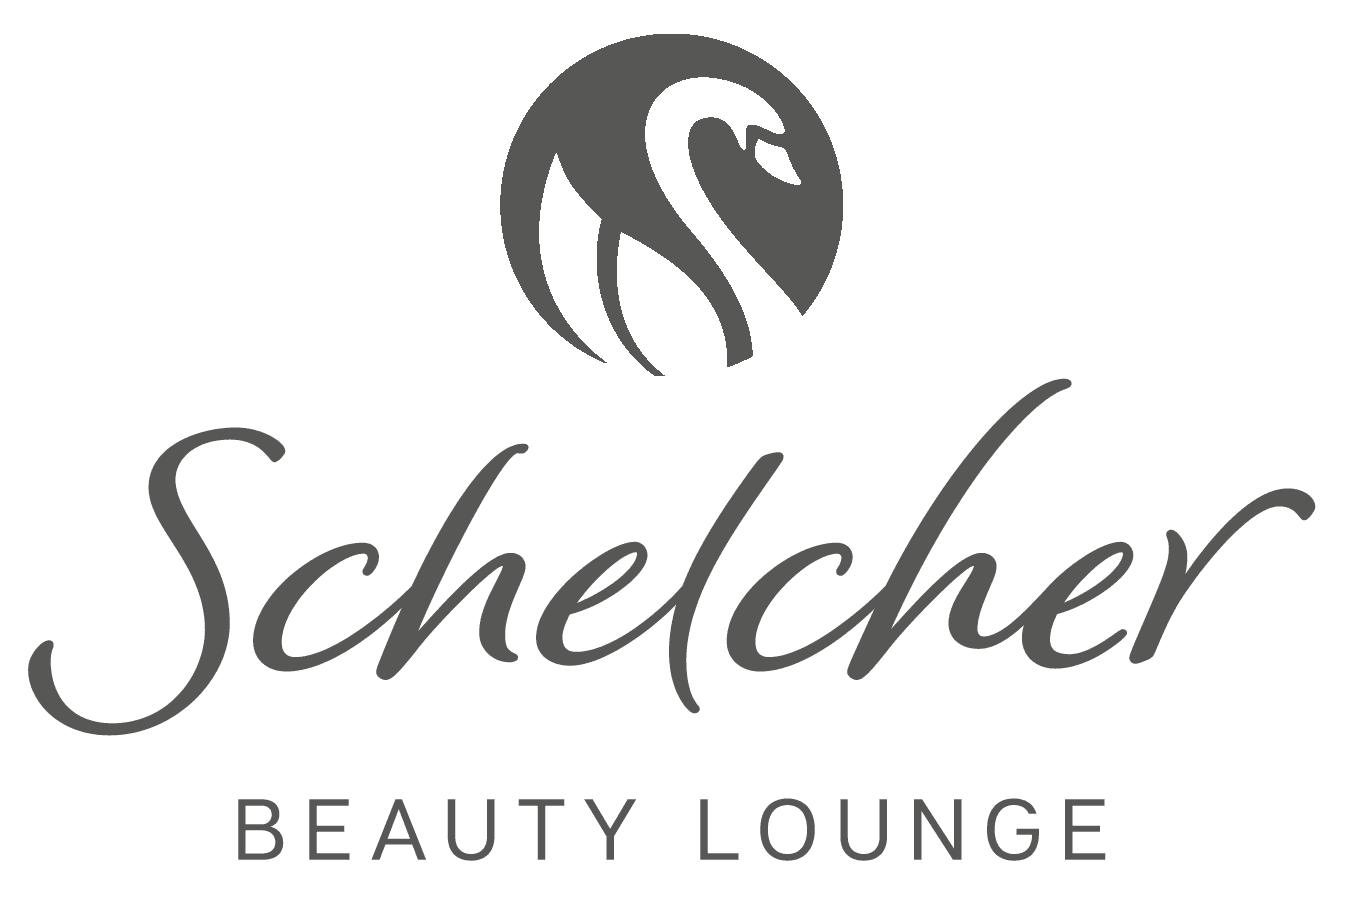 Schelcher Beauty Lounge in Verden